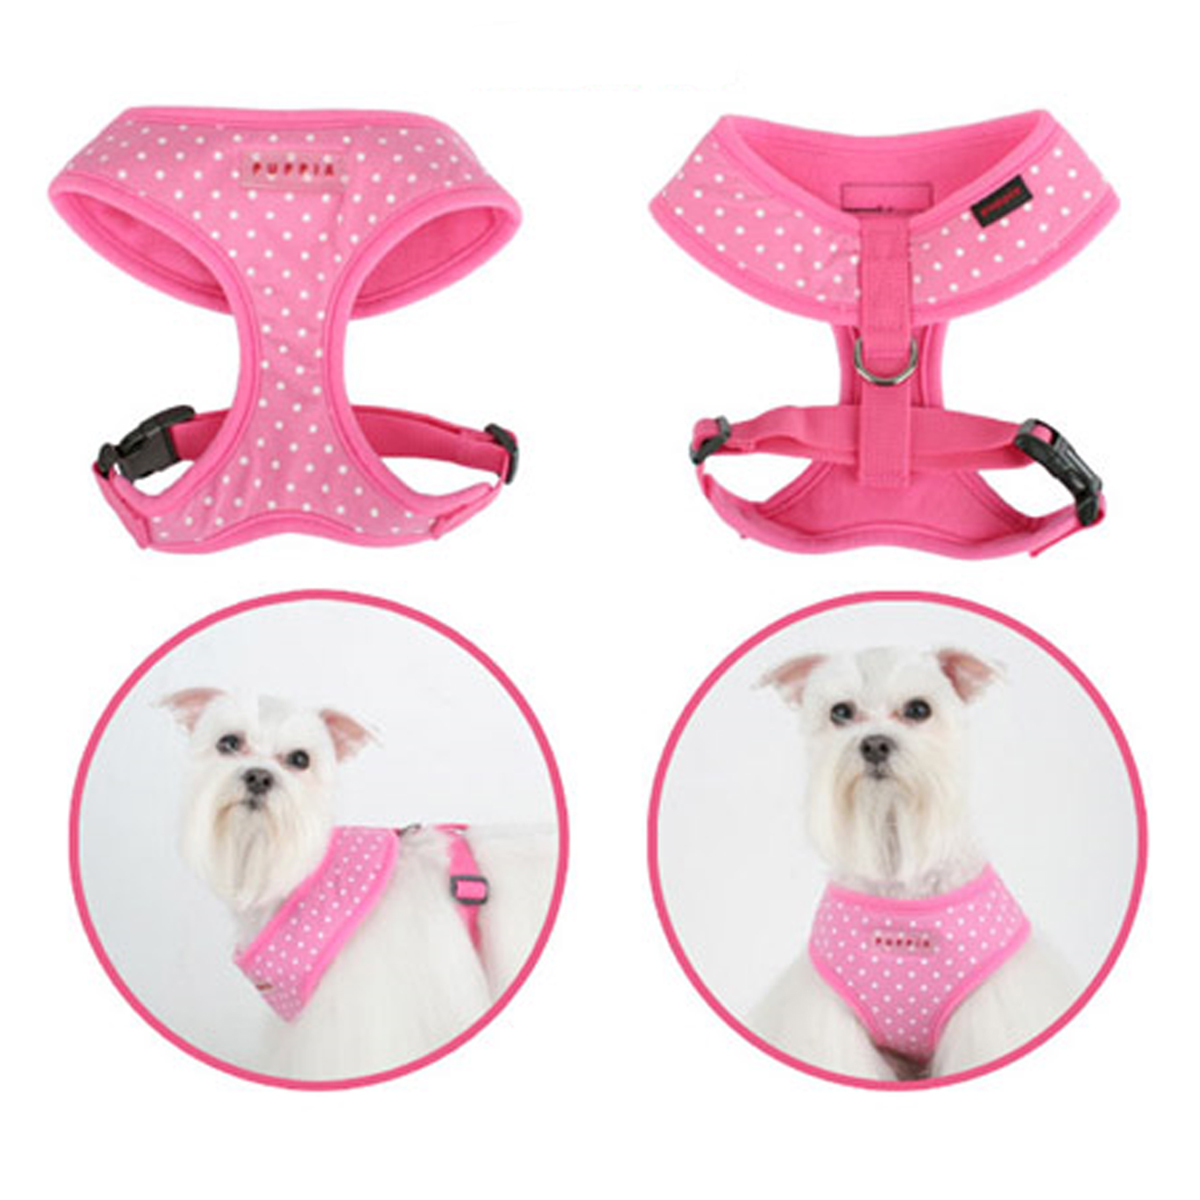 Fashion Dog Harnesses